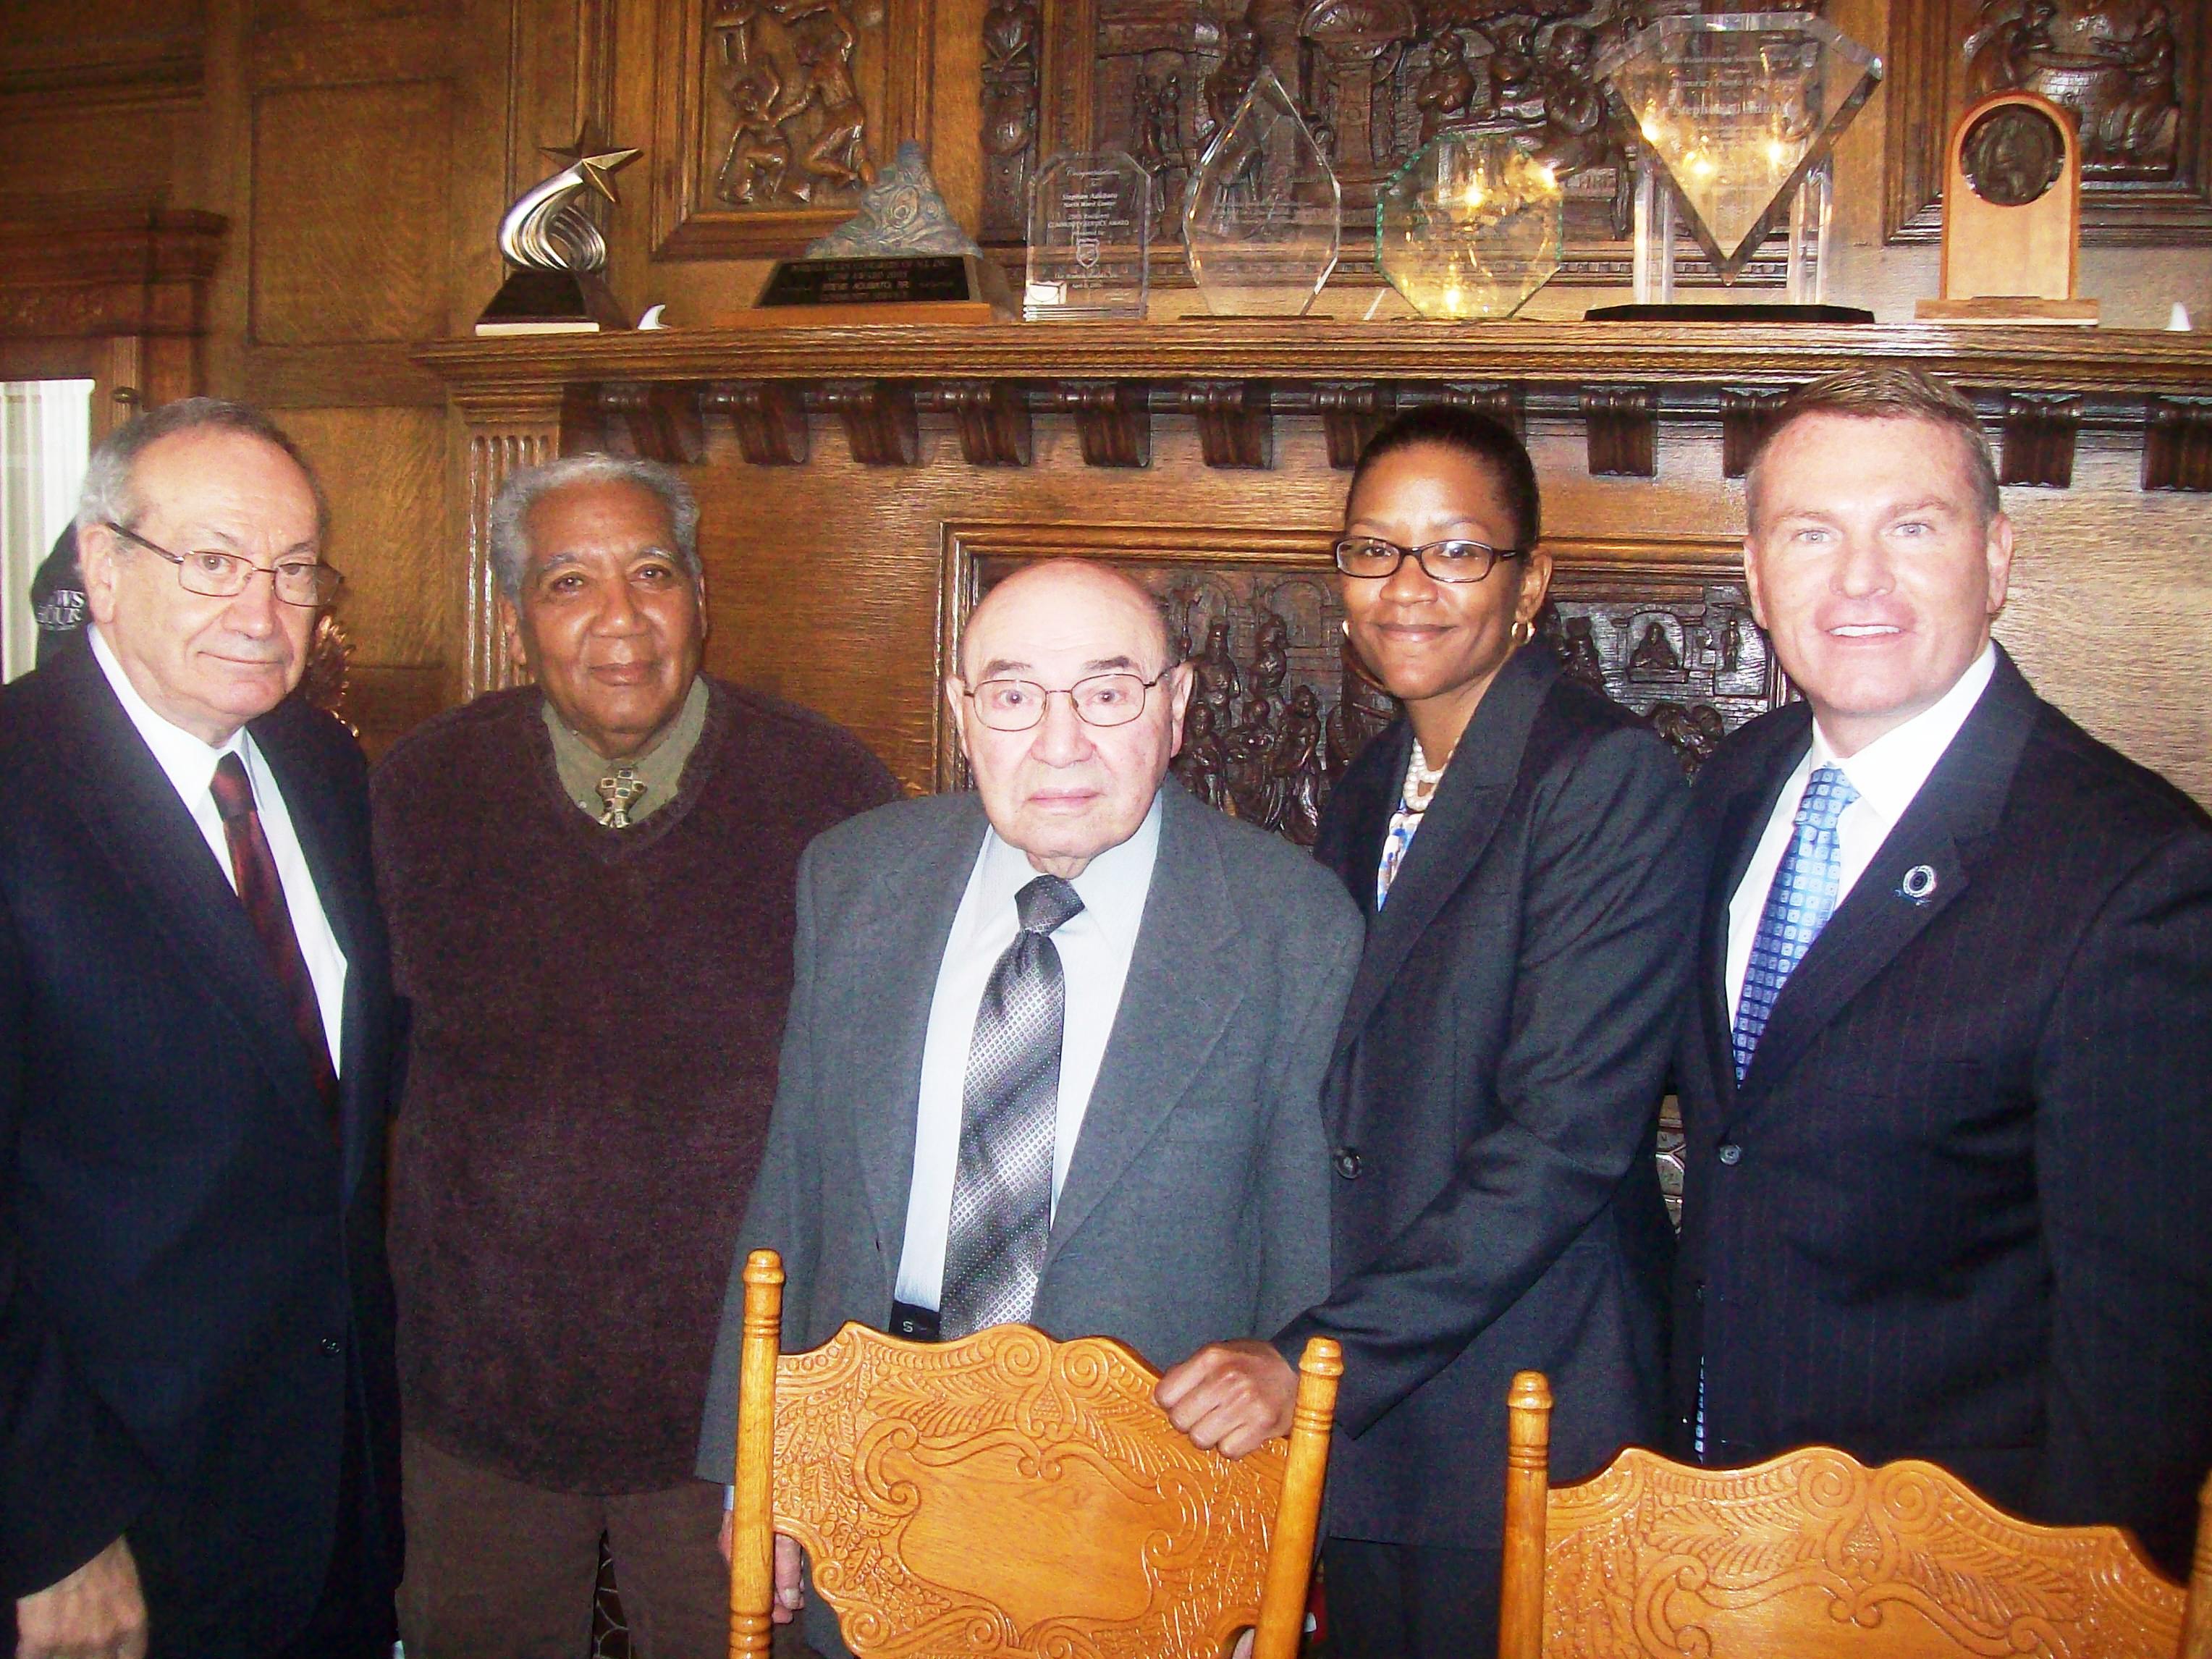 Left to right: Steve Adubato, Sr., George Richardson, Robert Sarcone, Assemblywoman Grace Spencer (D-Newark), and Essex County Clerk Christopher Durkin